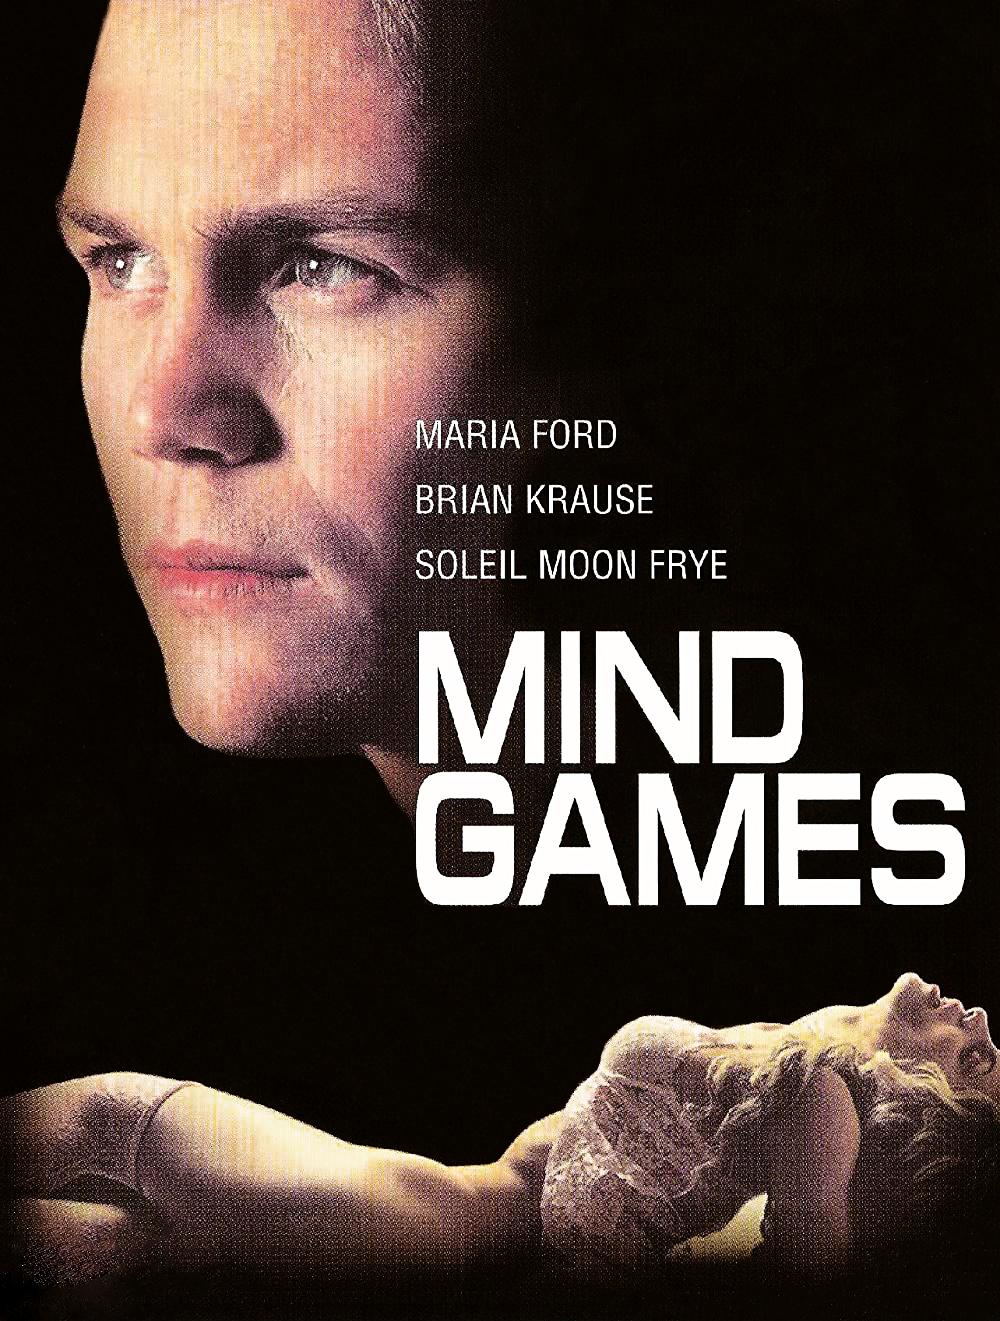 Mind Games (1996) starring Brian Krause on DVD on DVD